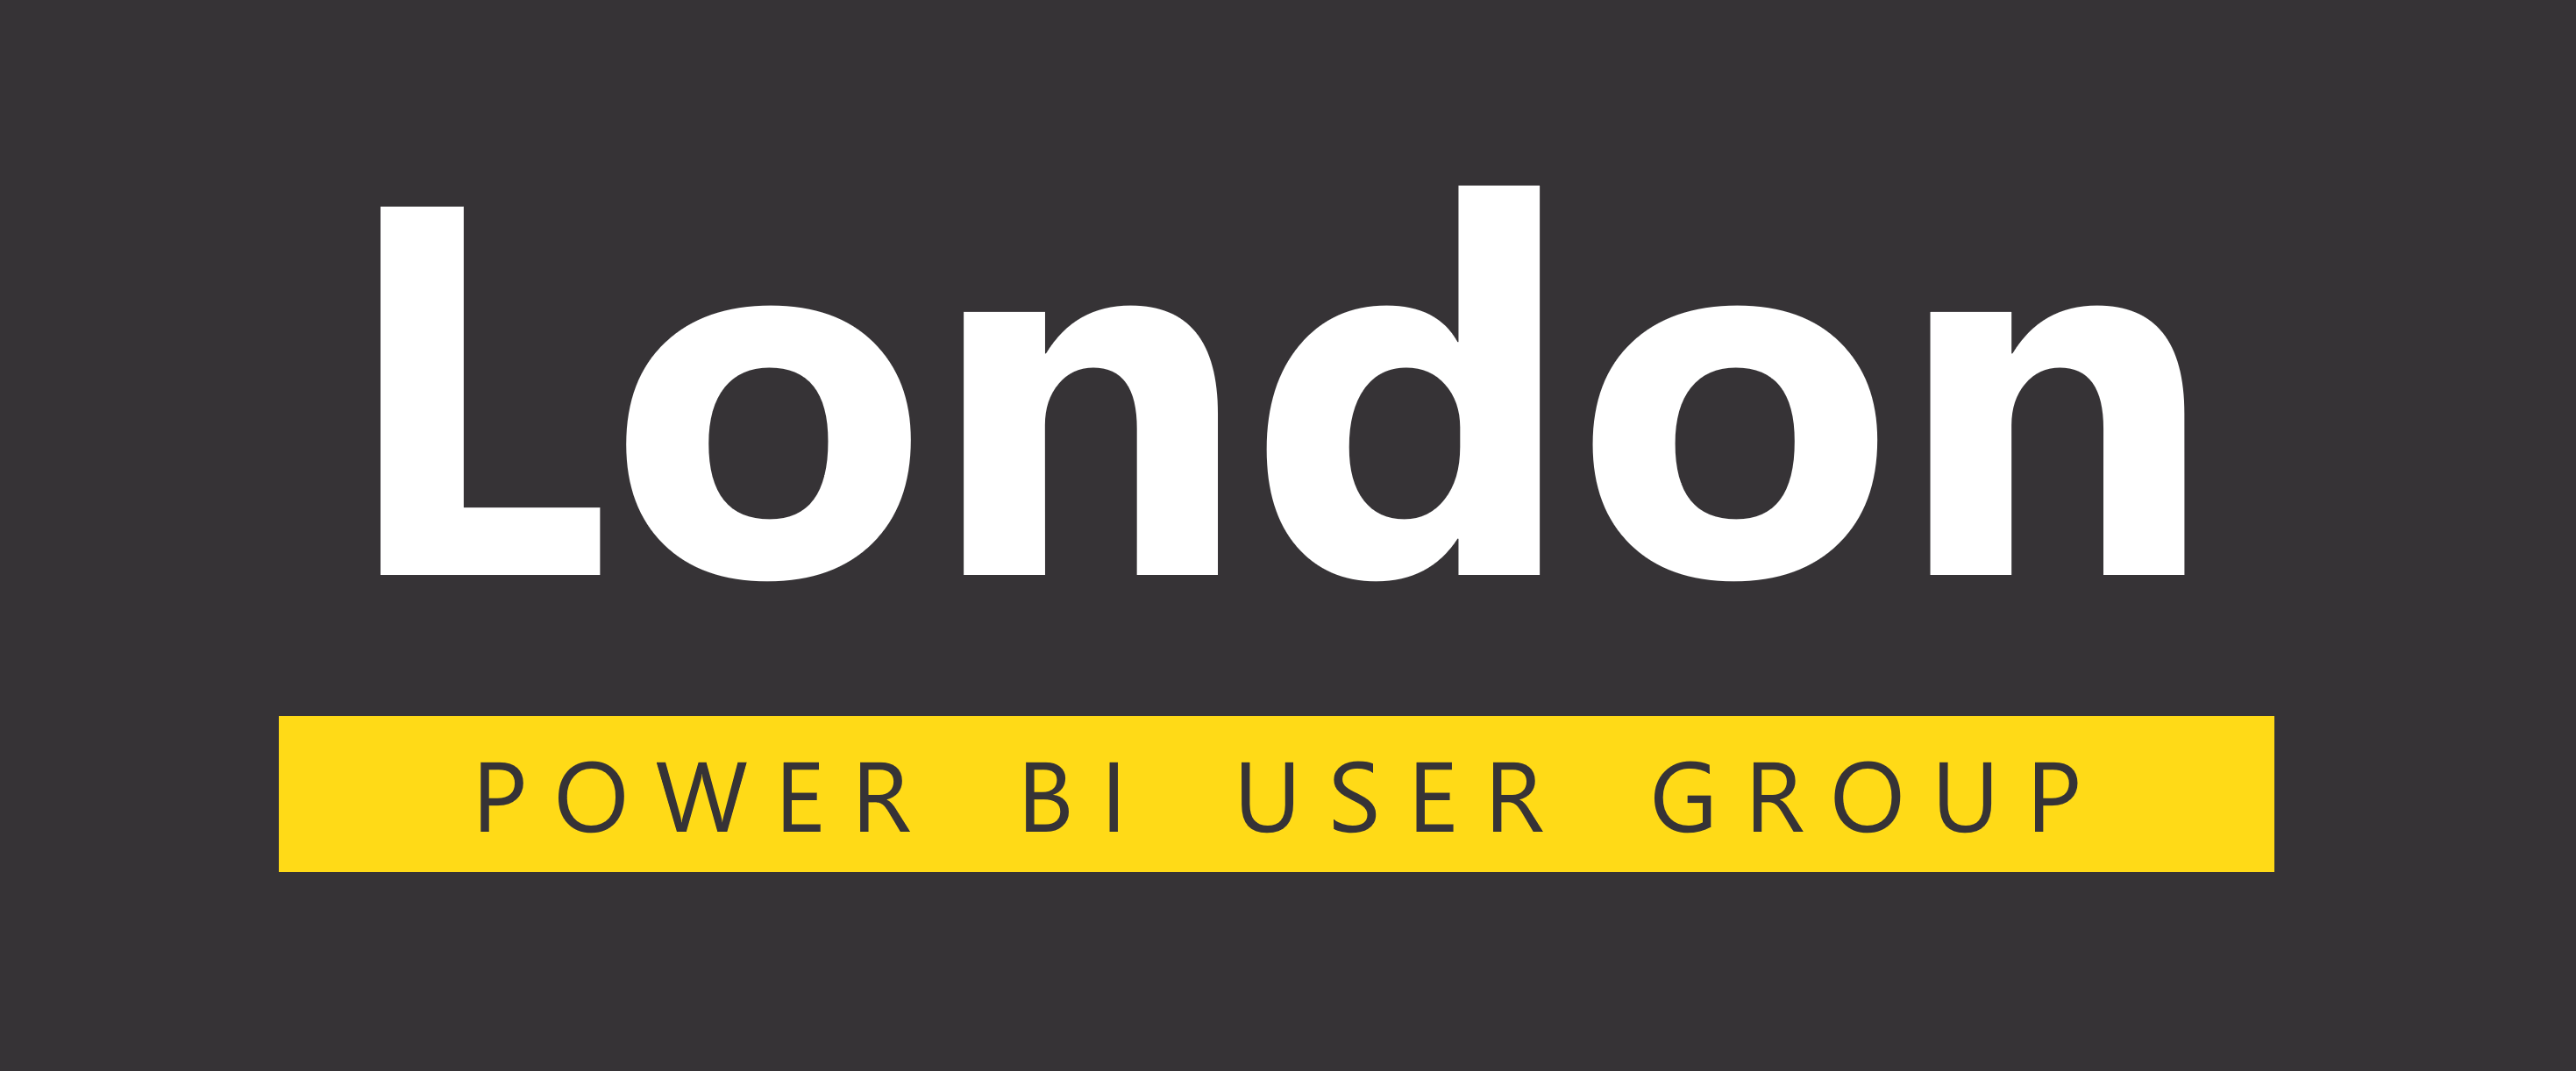 London Power BI User Group